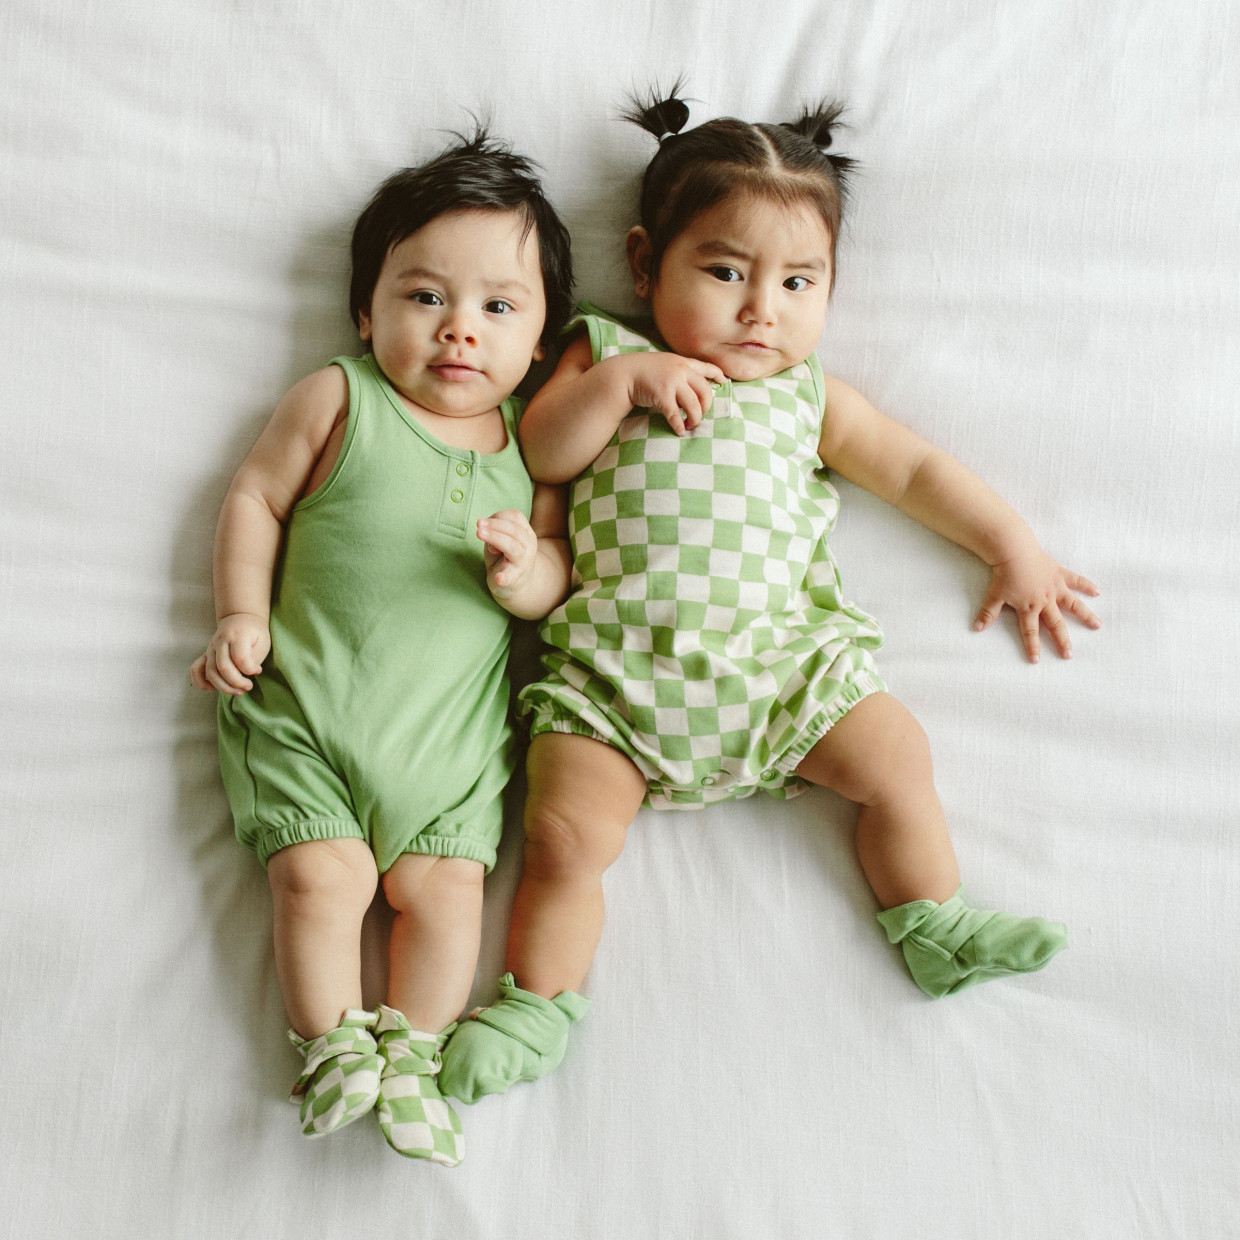 Goumi Kids Quick Change Baby Romper - Matcha, 3-6 M.